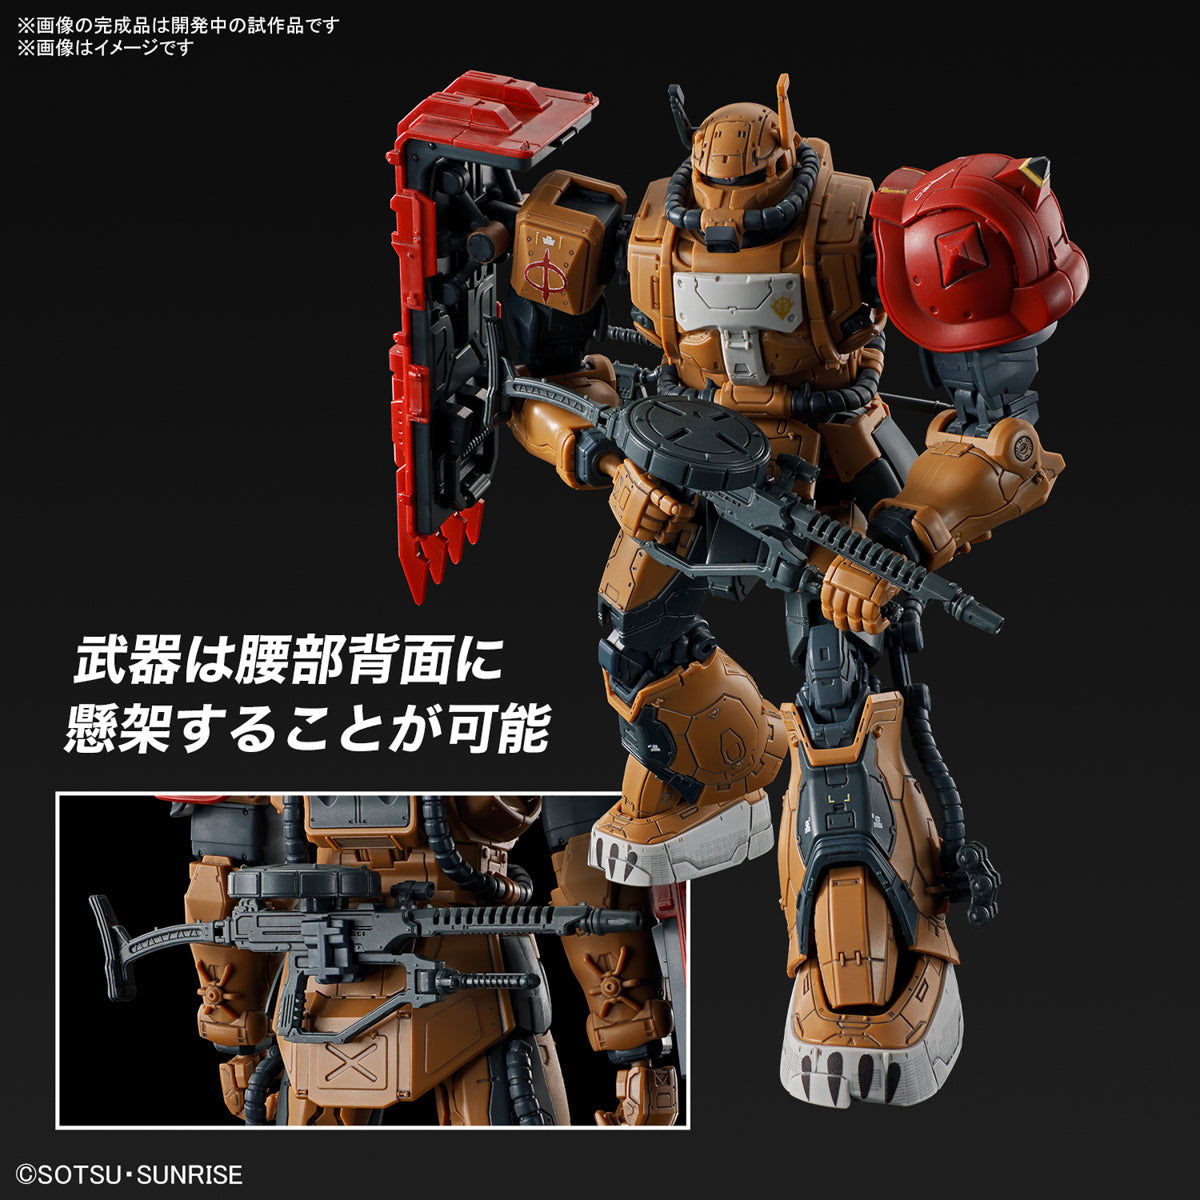 Bandai High Grade Requiem For Vengeance Zaku II F Type Solari's Machine RFV Action Figure Toy Model Kit VCA Singapore